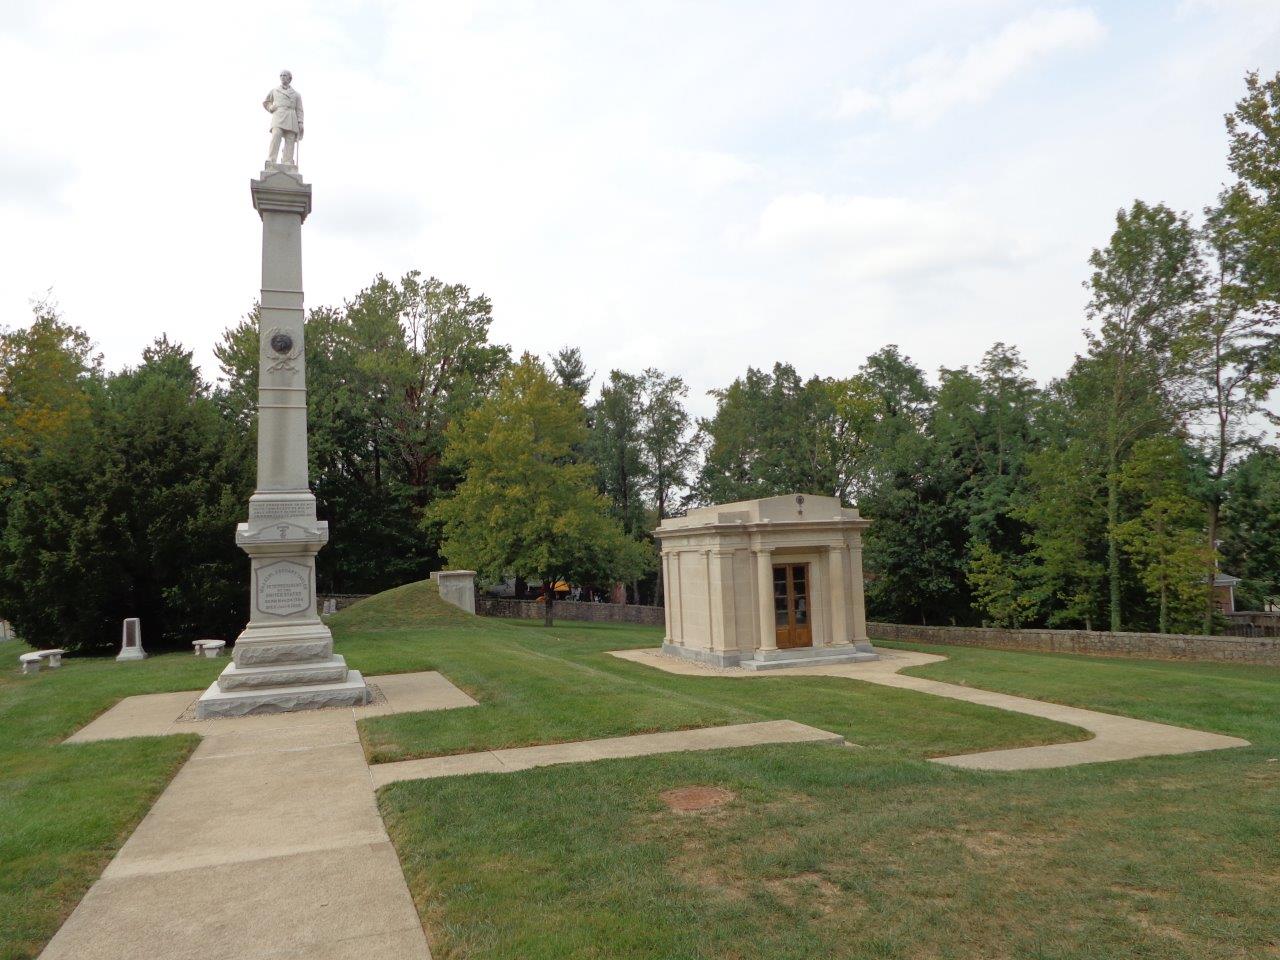 Zachary Taylor gravesite